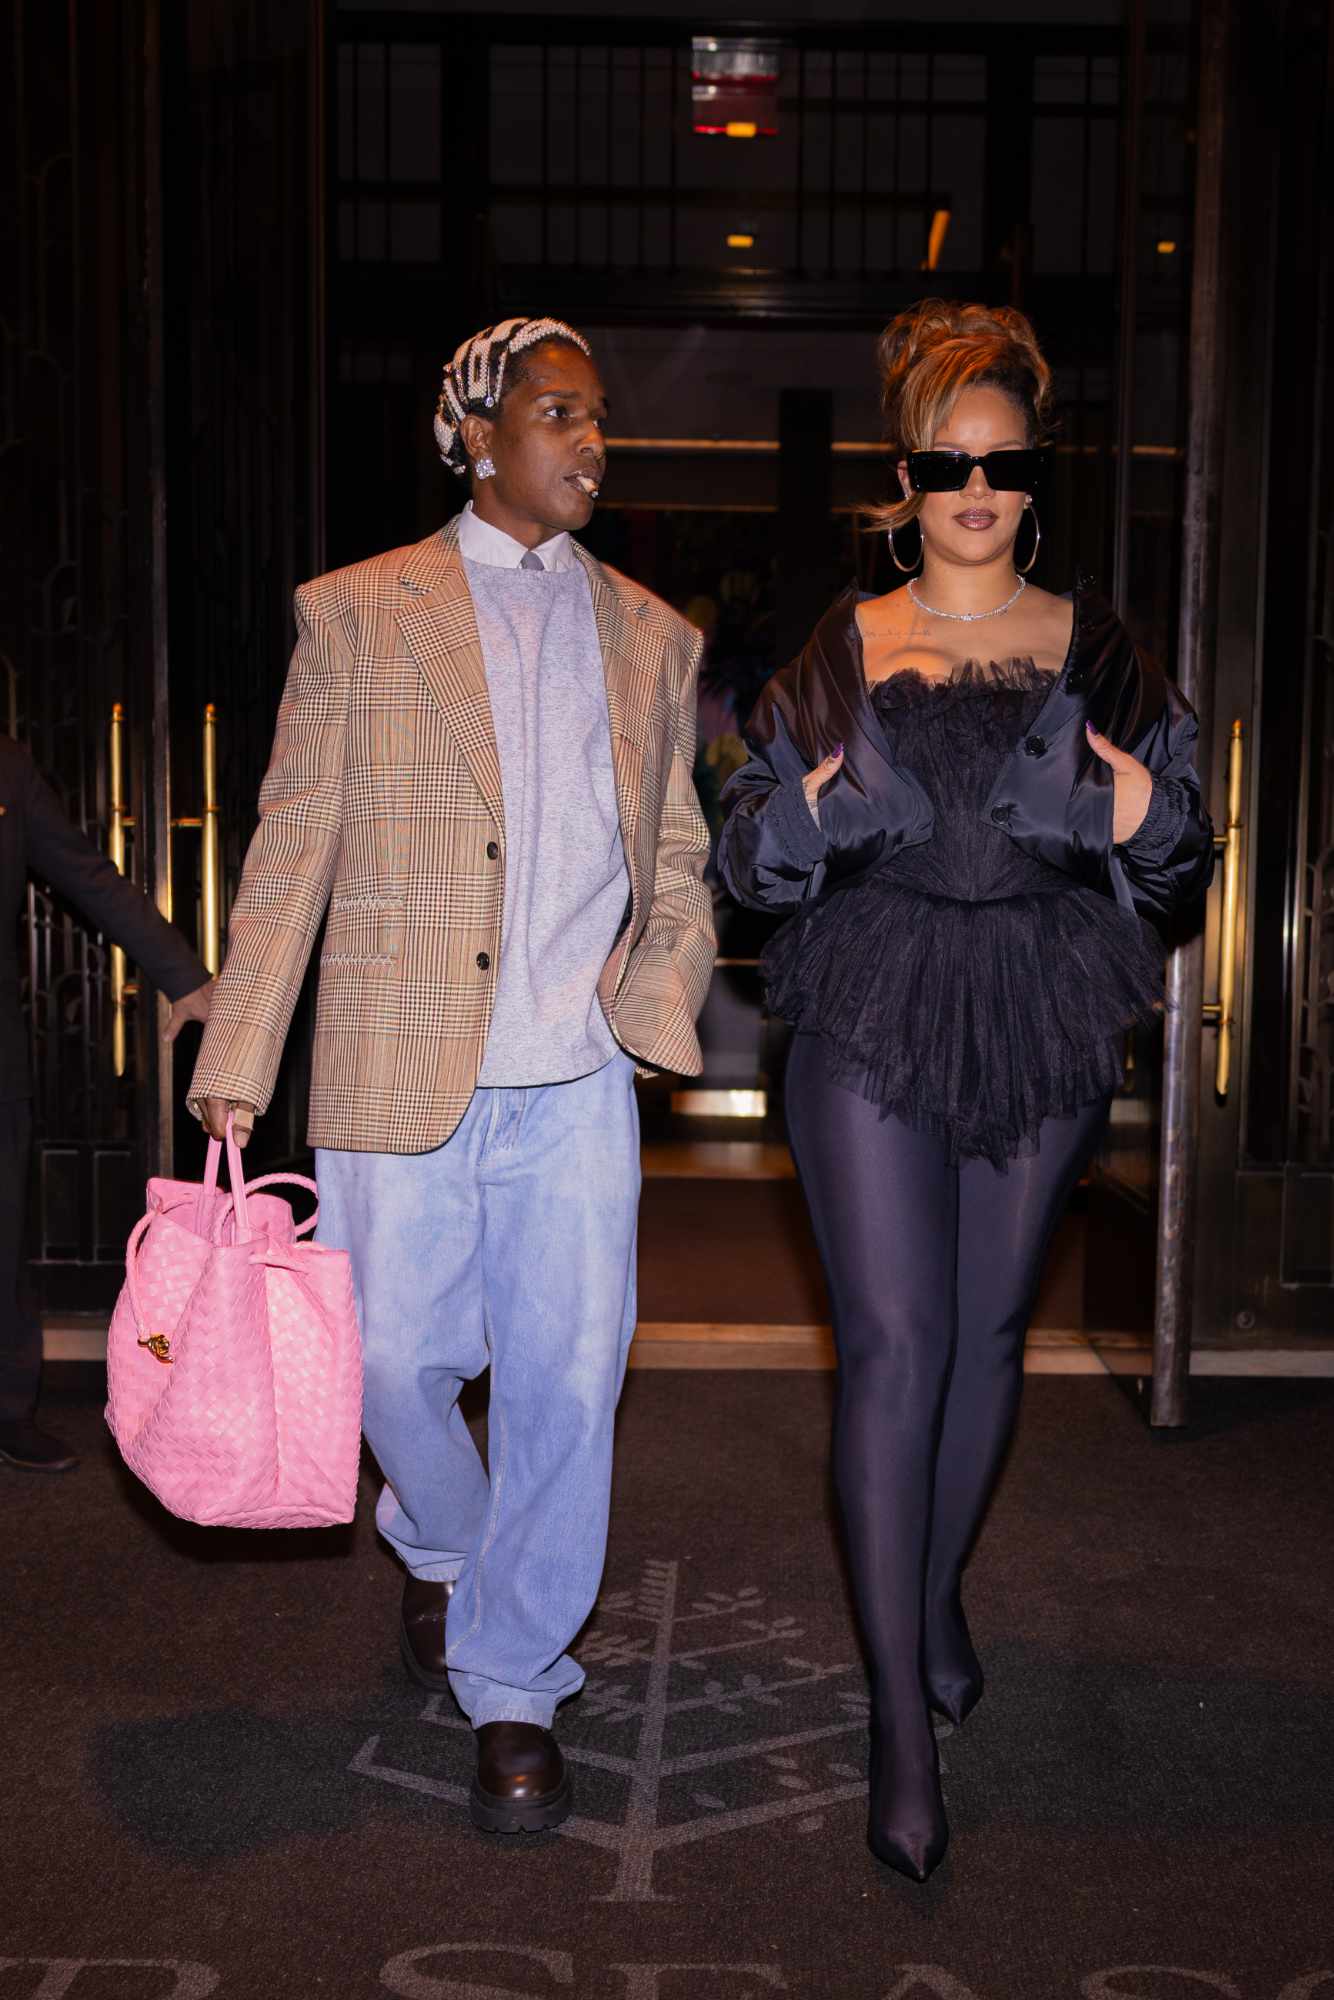 Rihanna Spotted with Bottega Veneta's Lauren Clutch in NYC